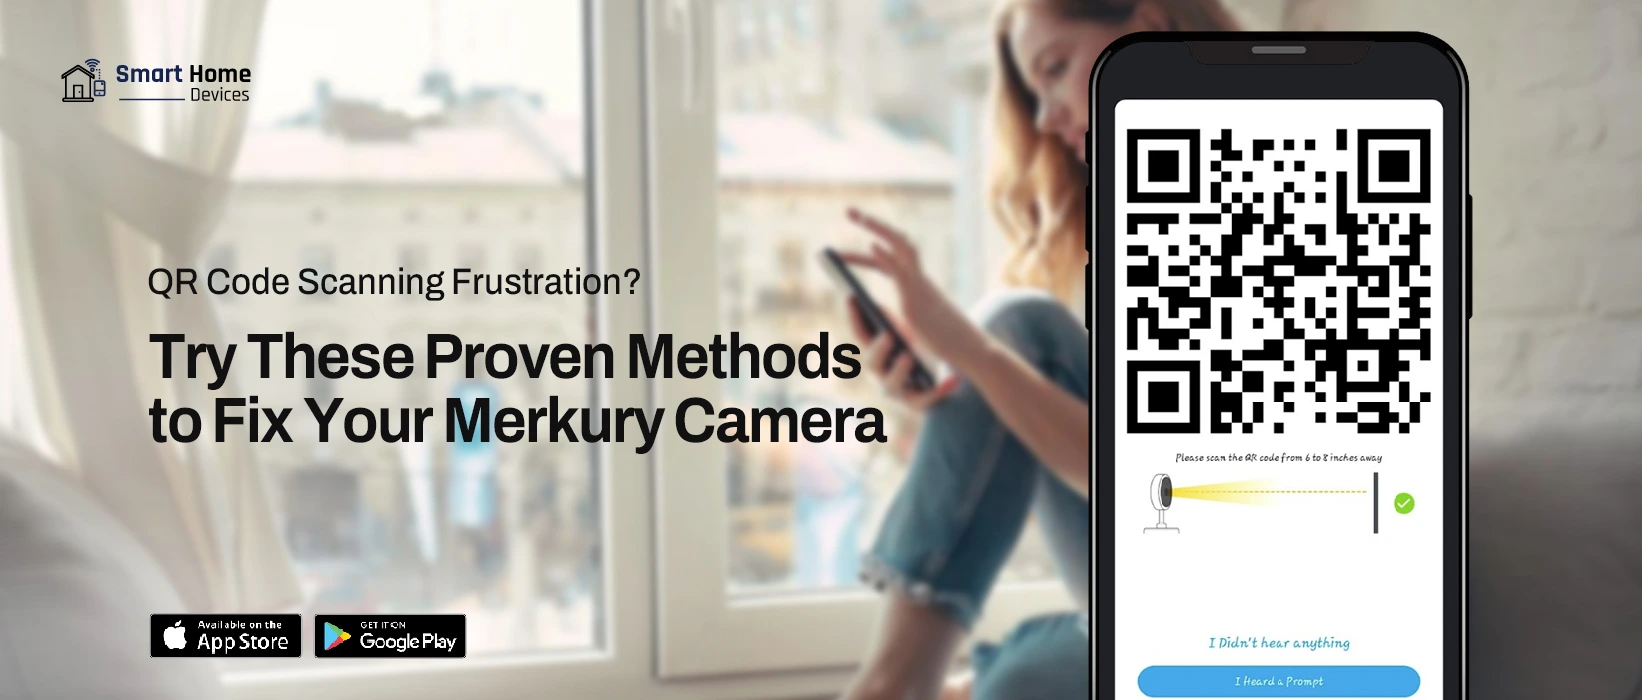 How to Fix Merkury Camera Wont Scan QR Code?